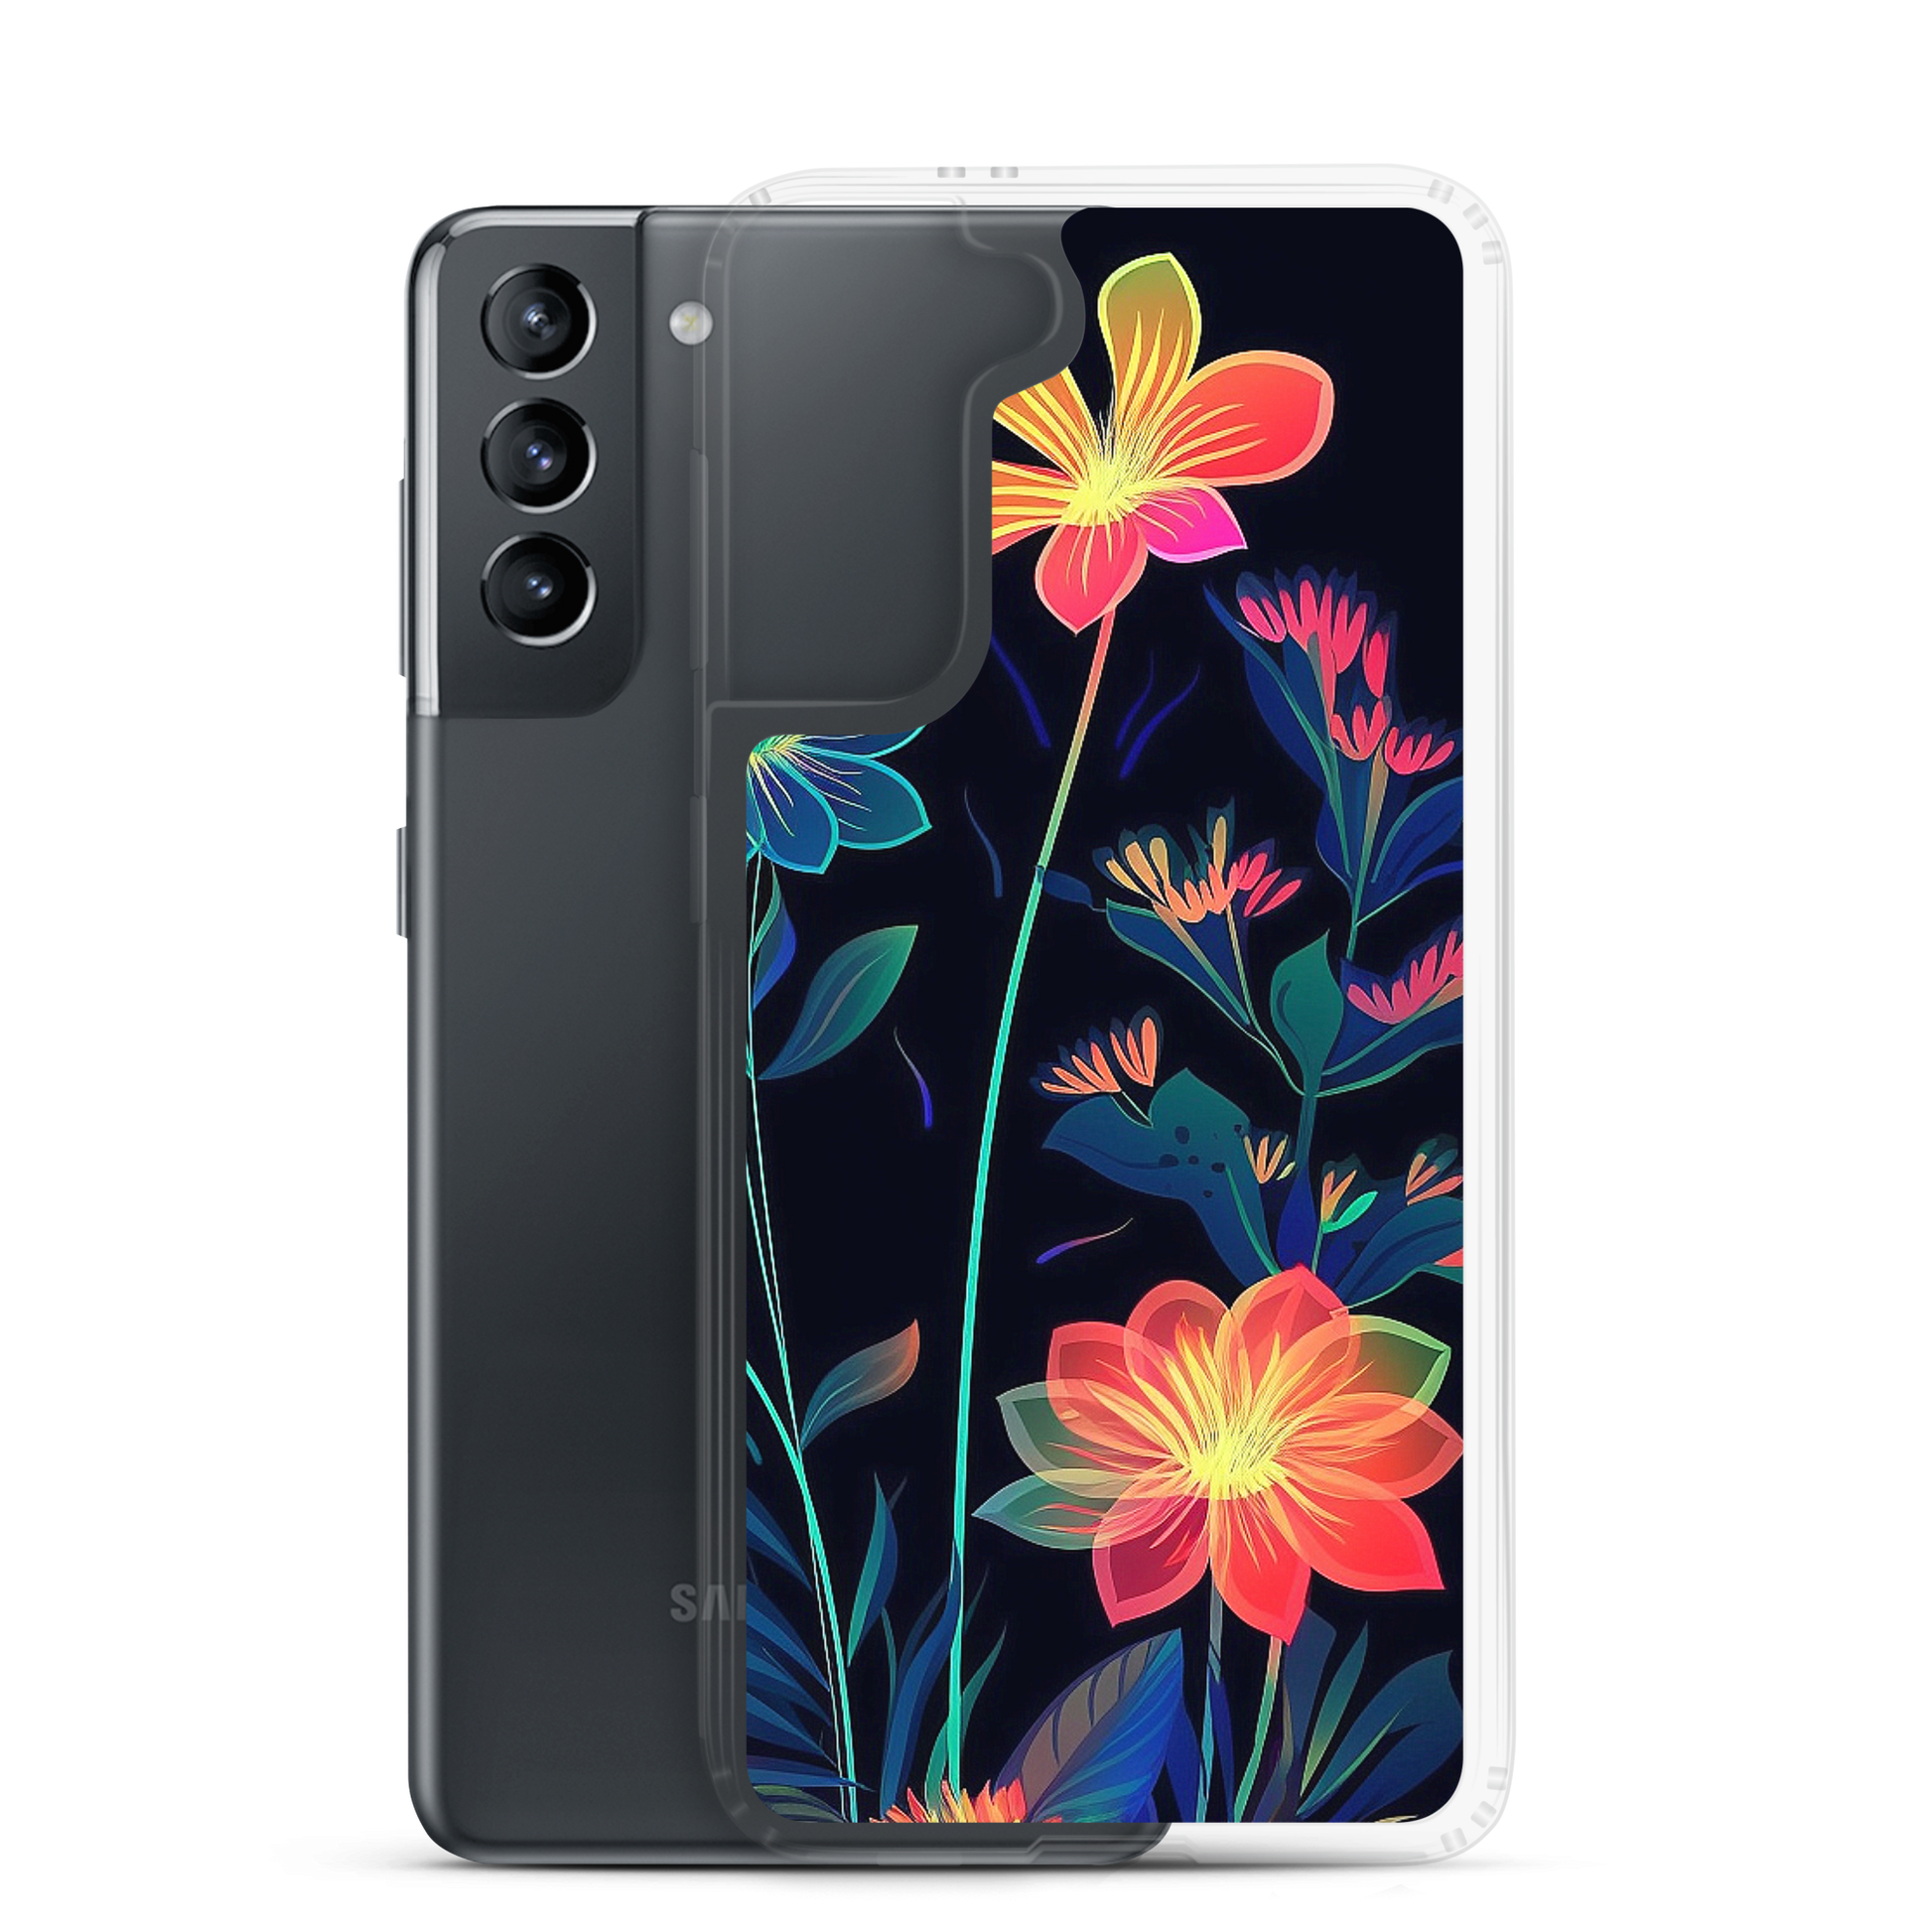 Spectral Flowers - Samsung Scratch-Resistant Clear Phone Case DrawDadDraw